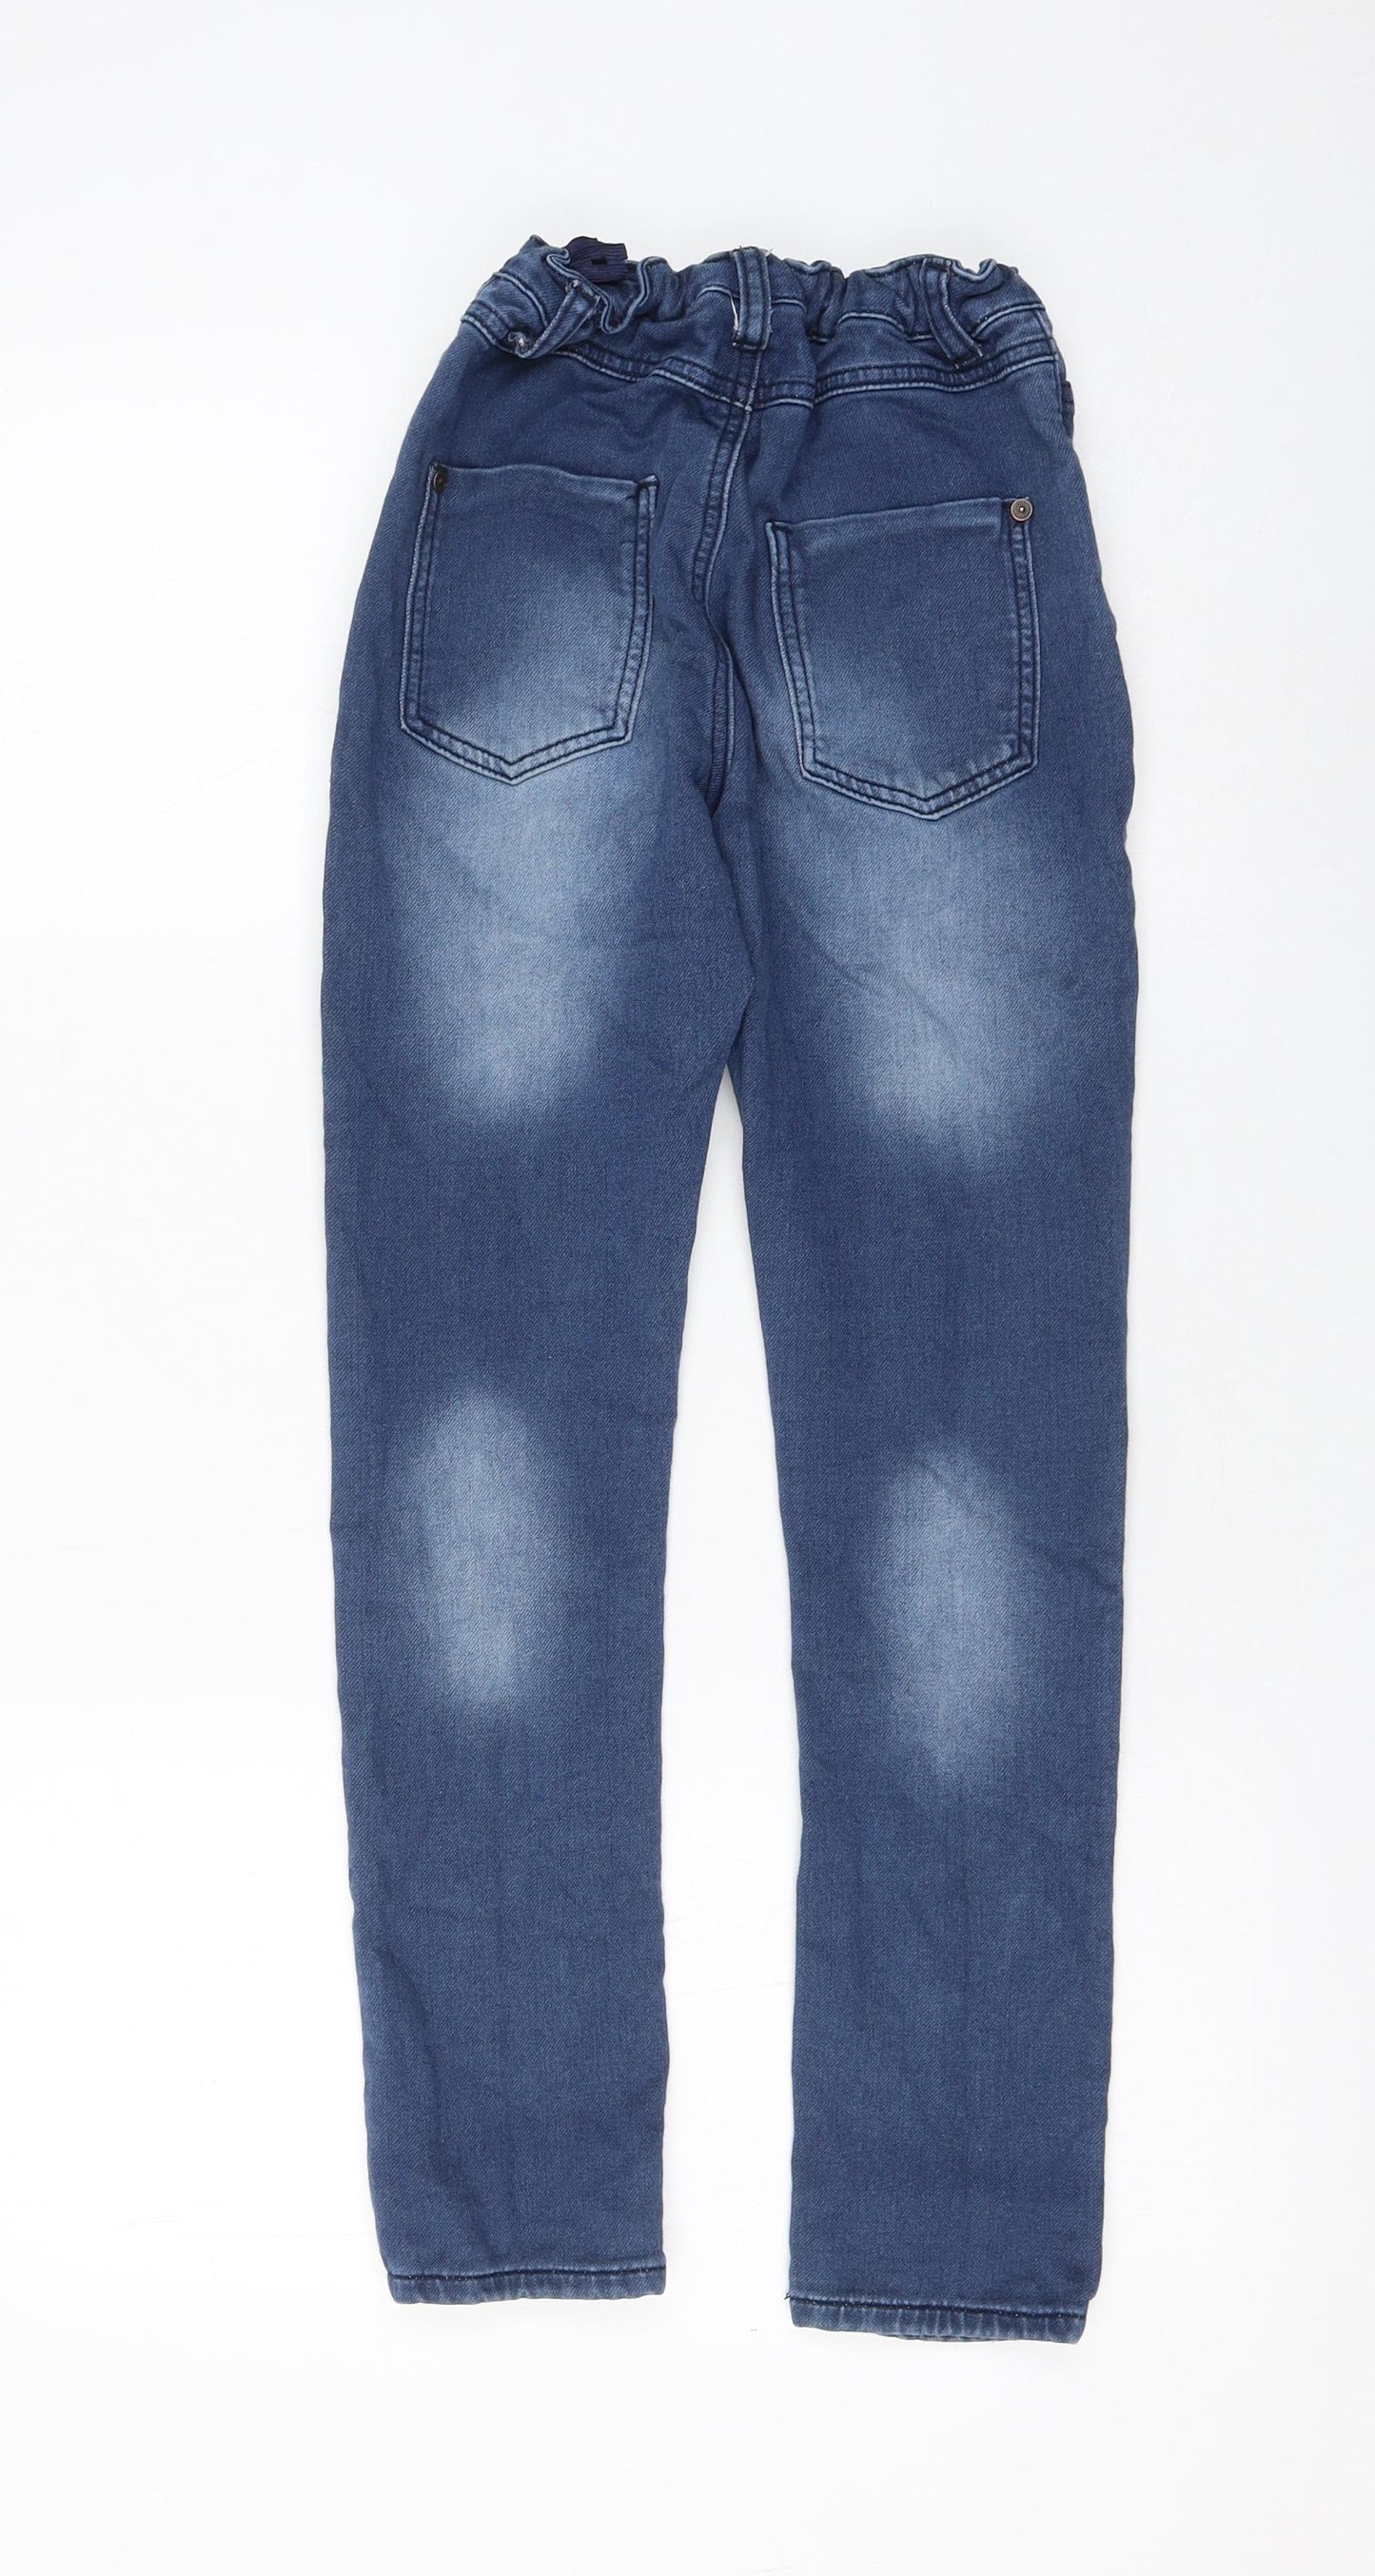 Jack Greens Girls Blue Cotton Skinny Jeans Size 9-10 Years Regular Zip